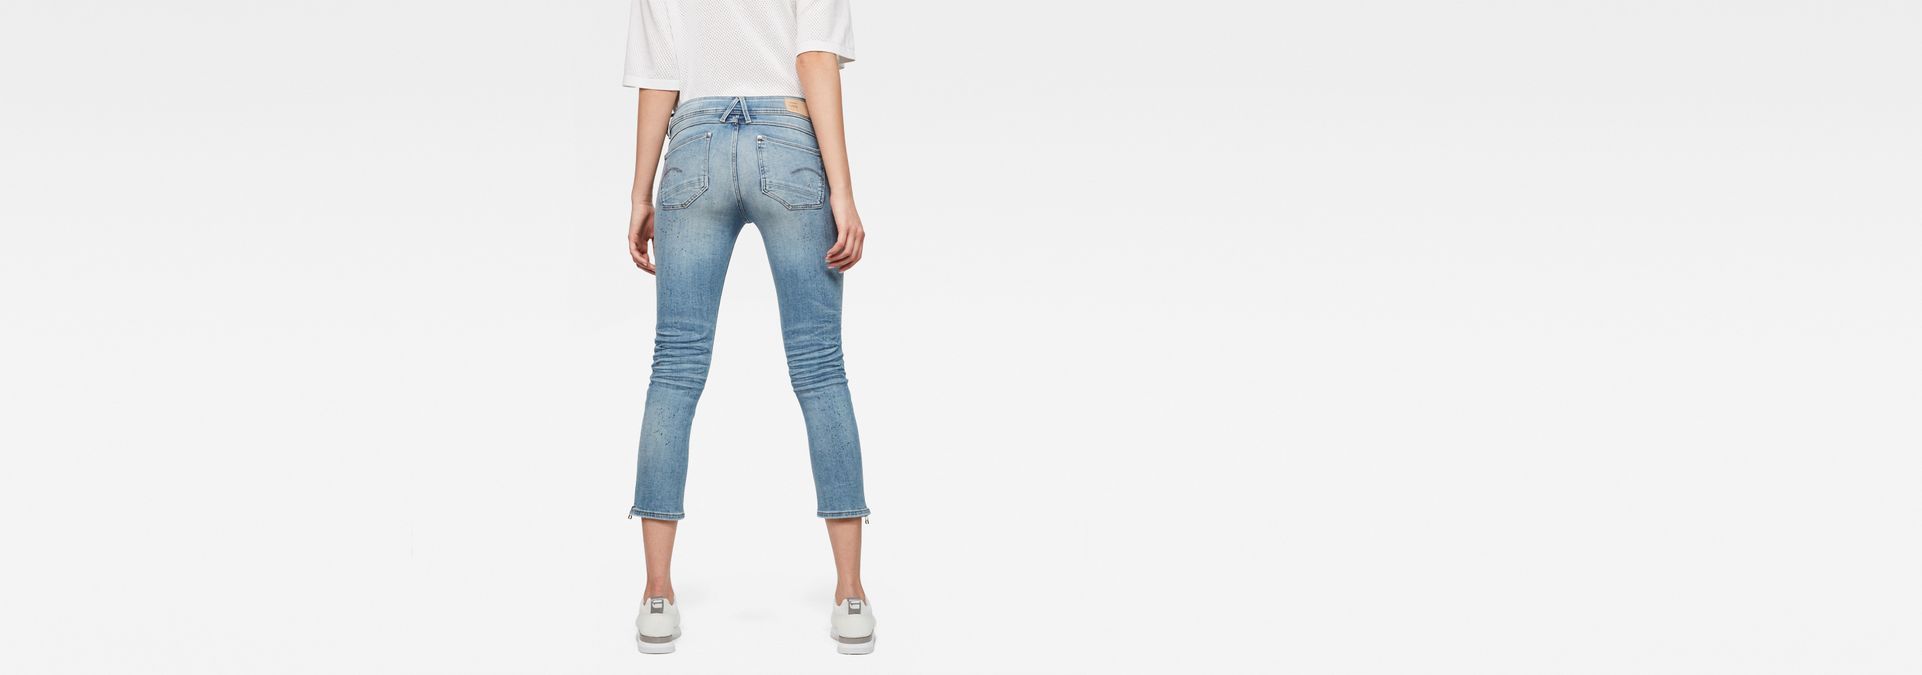 Lynn Ultra High Waist Skinny 7 8 Length Jeans G Star Raw